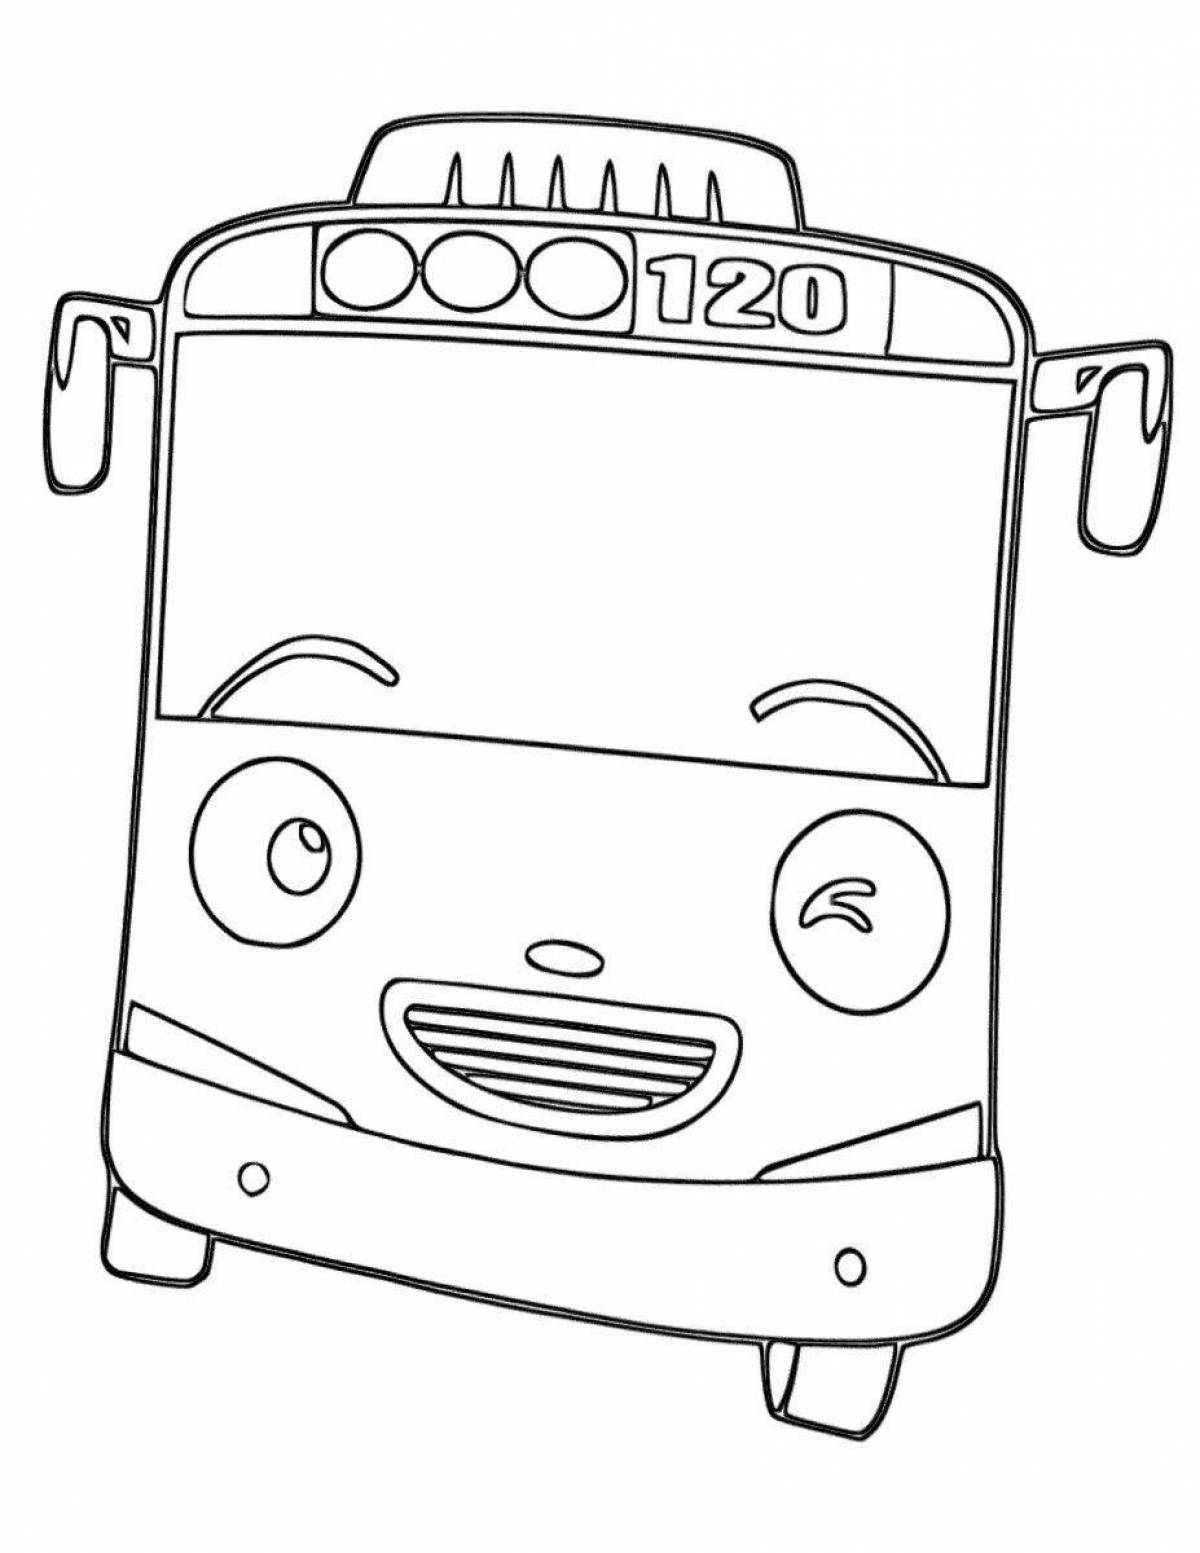 Gordon's bus coloring page